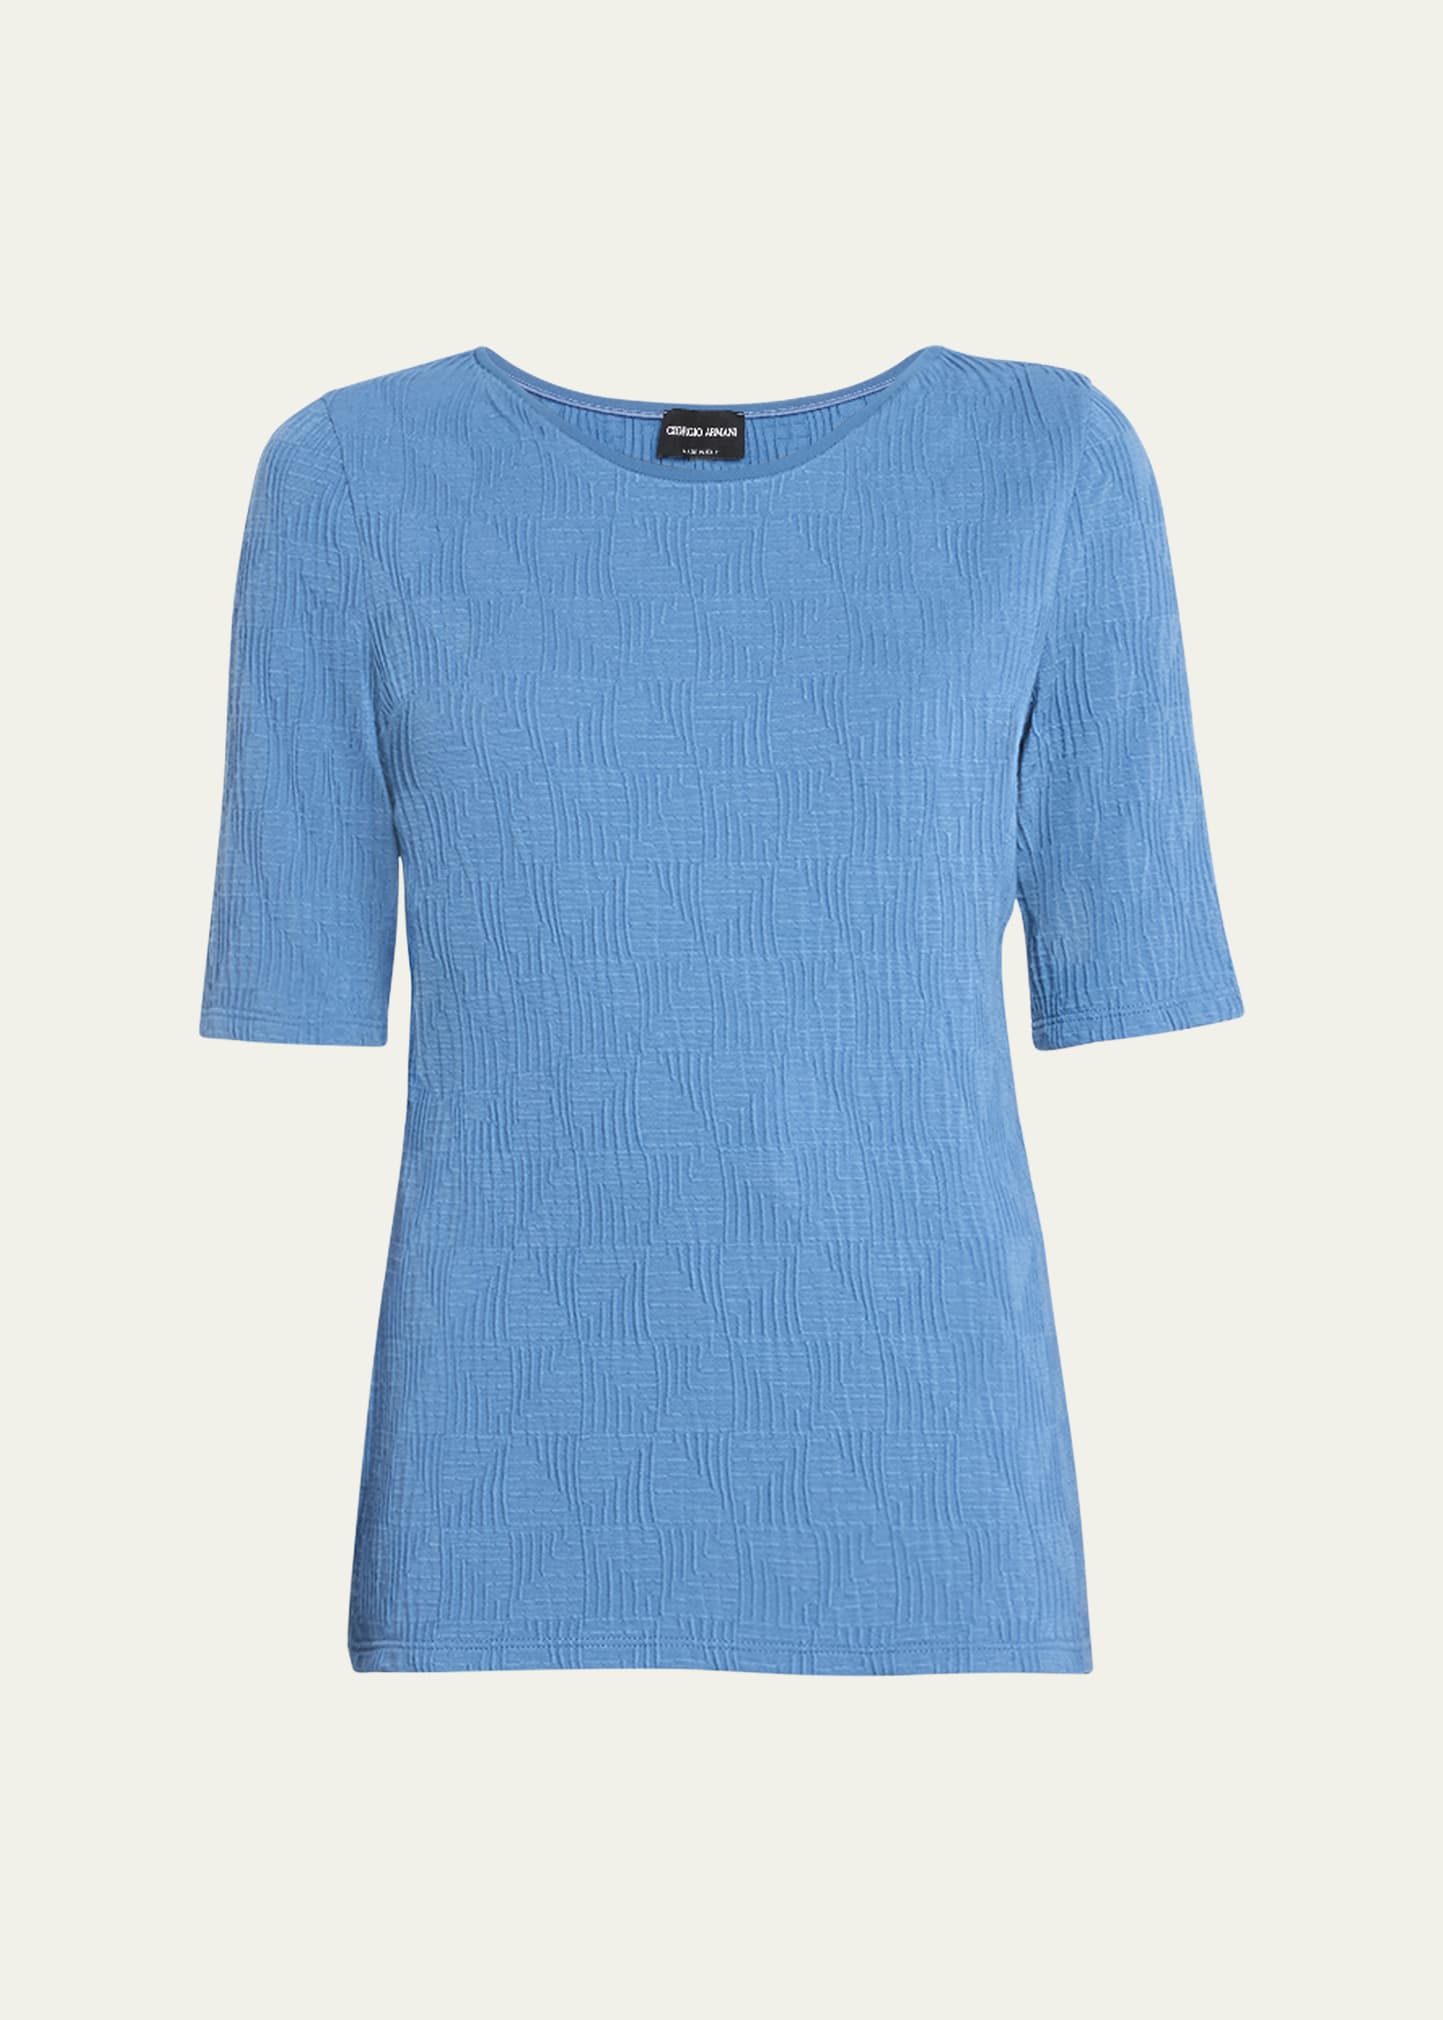 Giorgio Armani Textured Jersey Slim Top In Solid Medium Blue